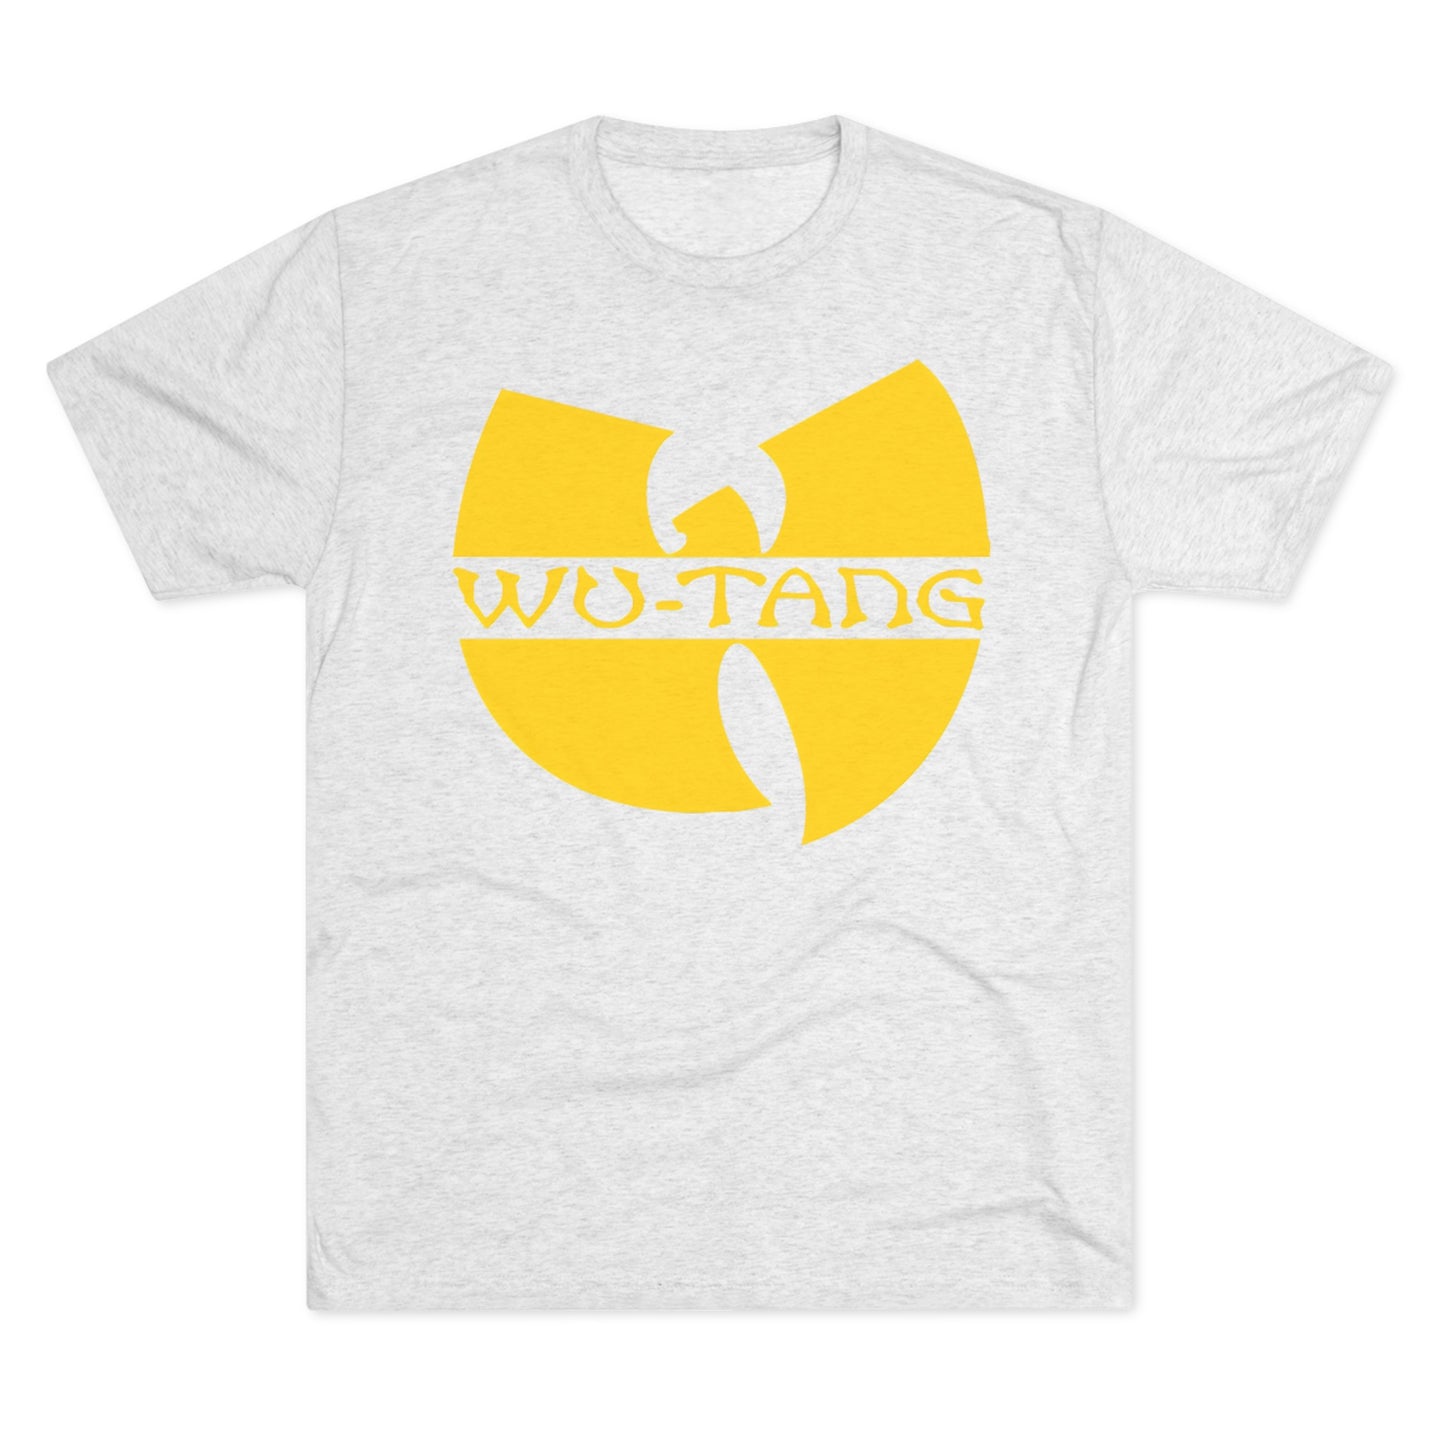 Wu-Tang Clan Inspired Tri-Blend T-Shirt - Ultra-Soft, Lightweight & Stylish